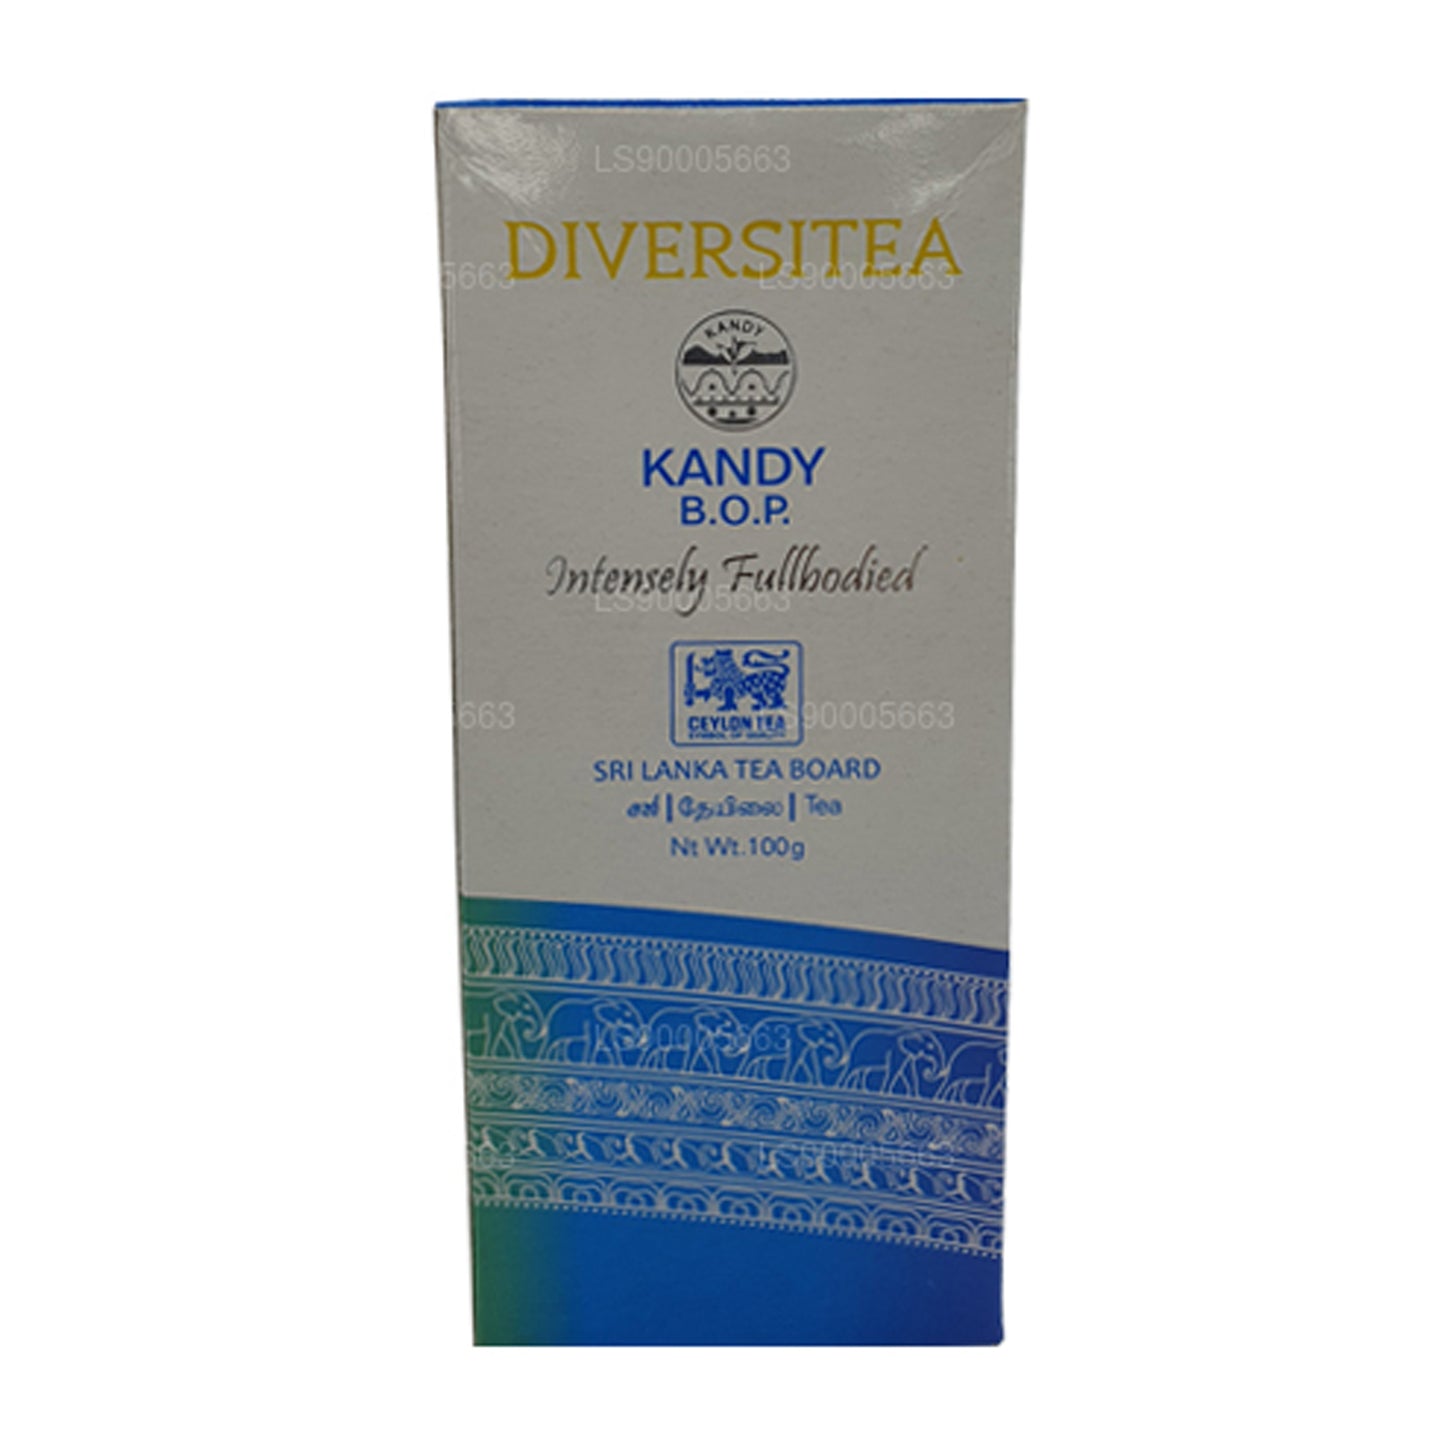 Lakpura Kandy zwarte thee uit één regio